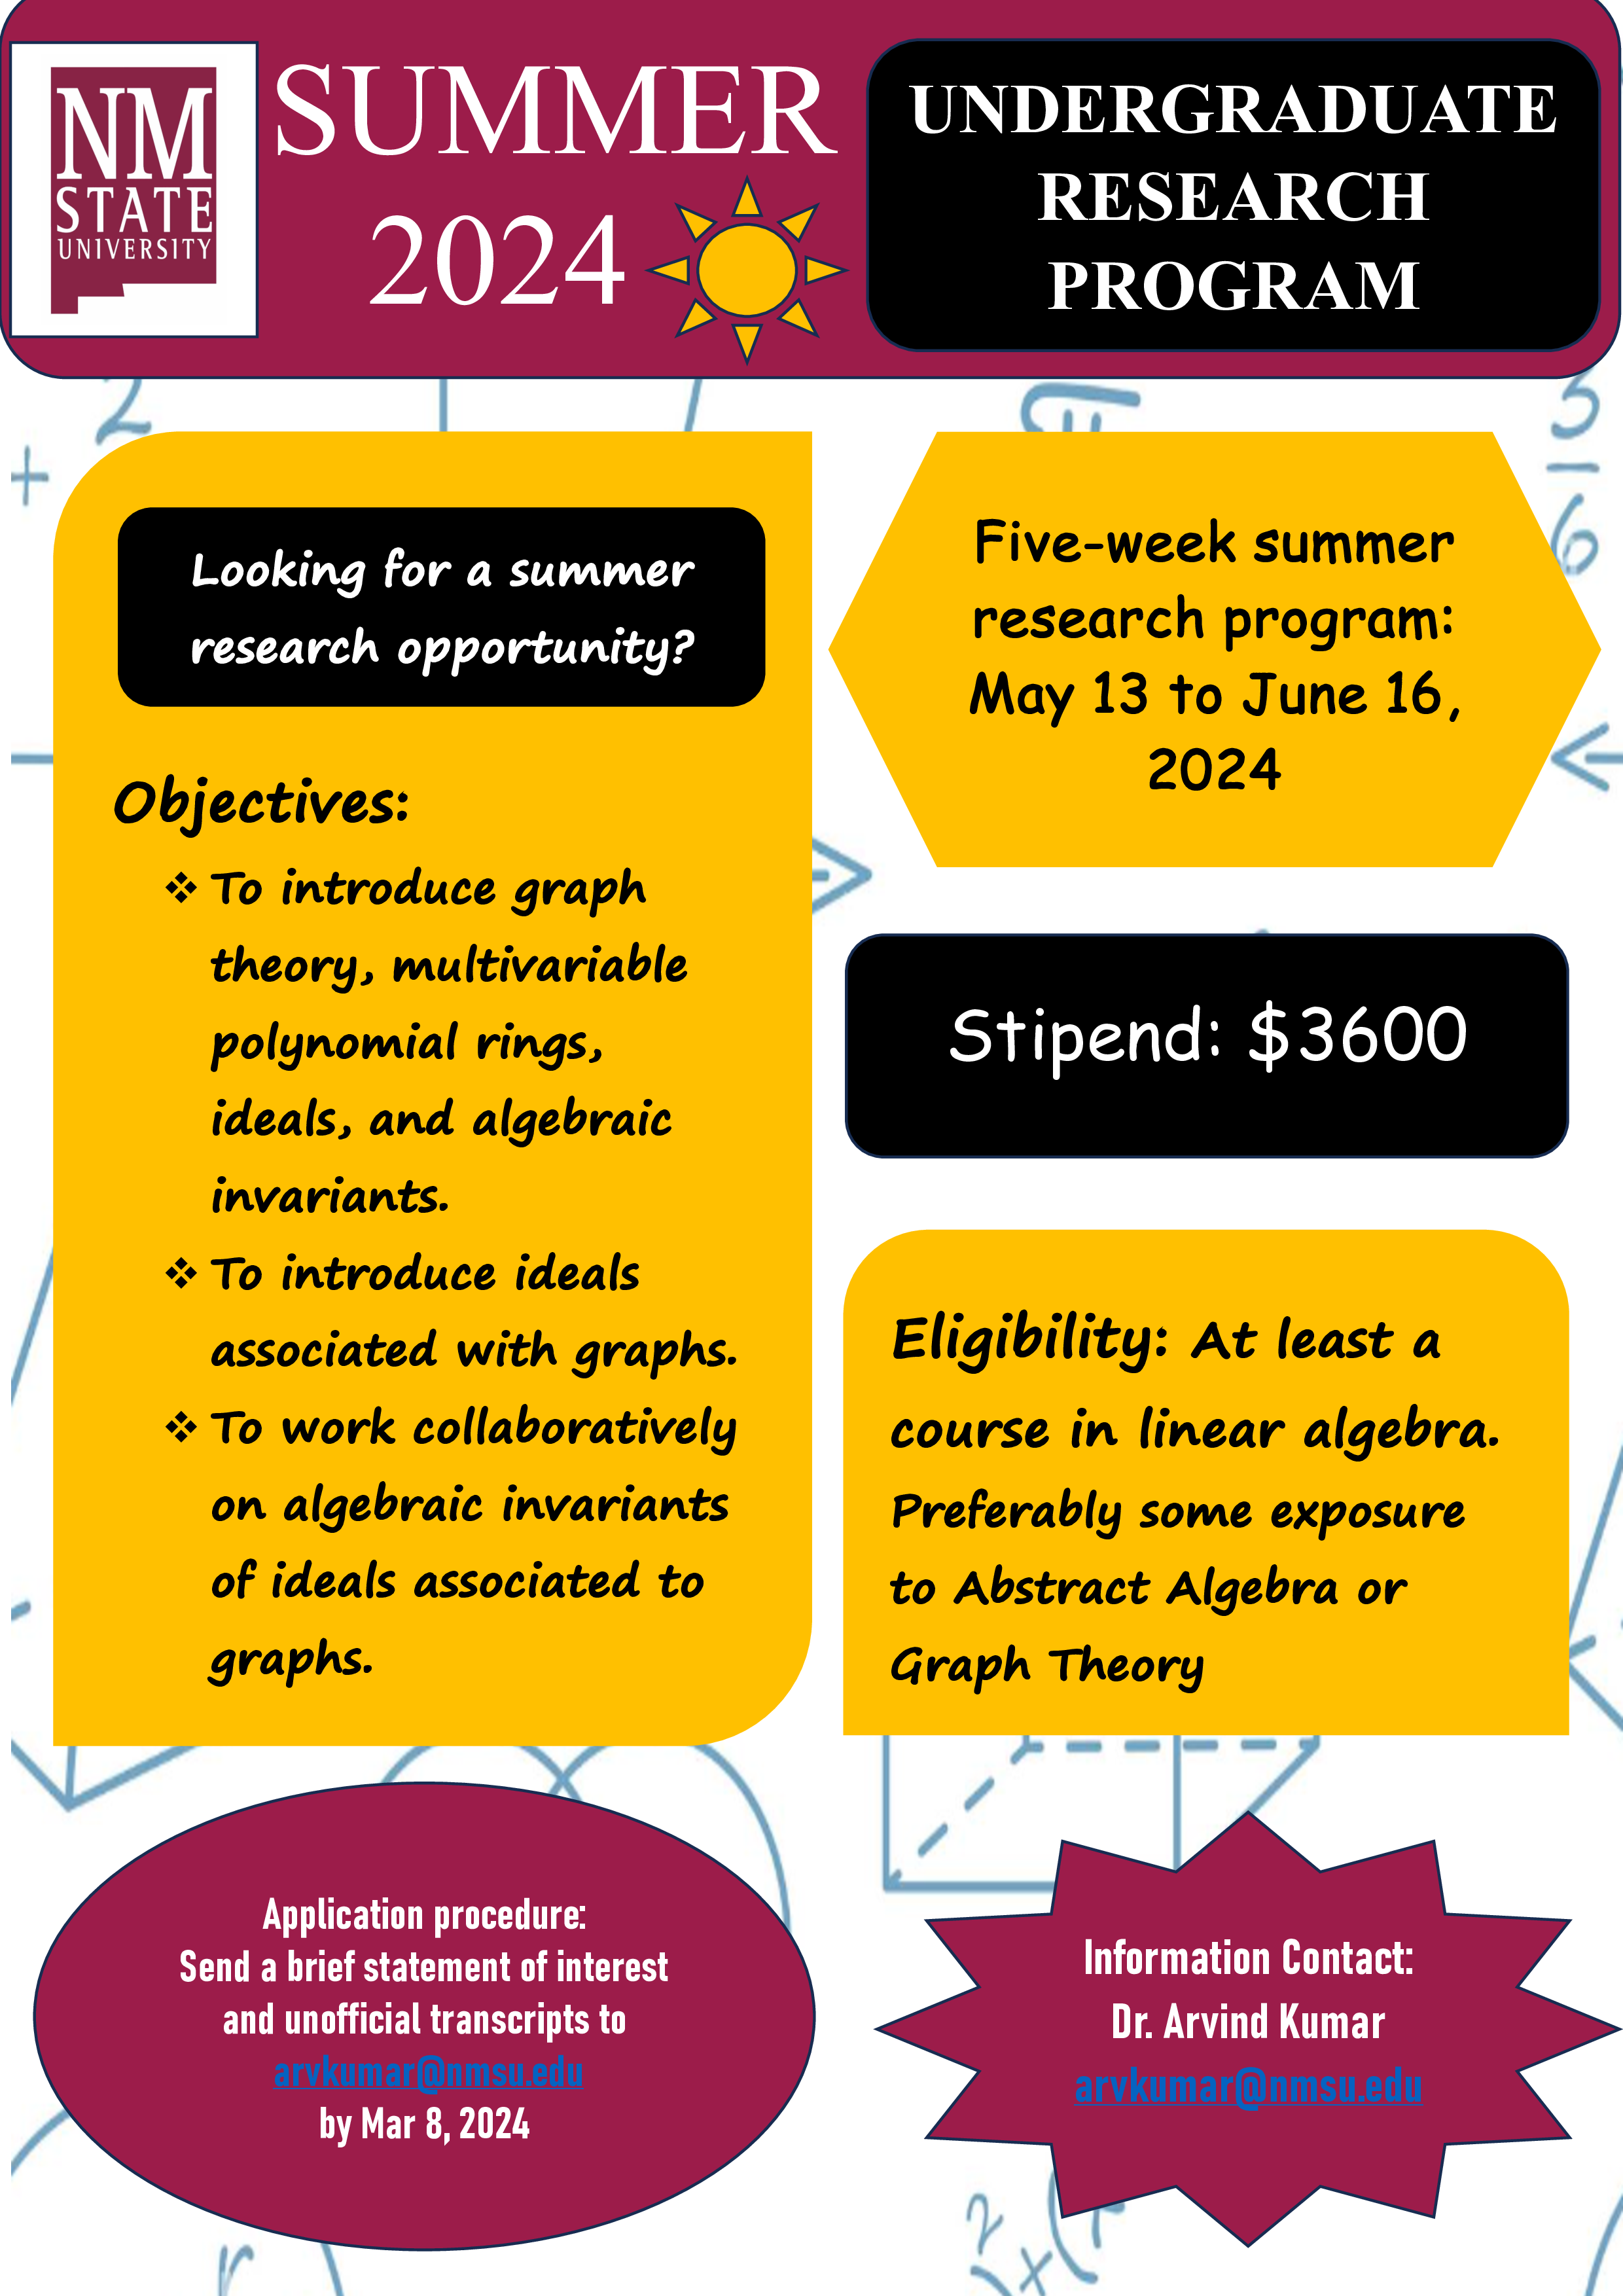 Summer 2024 Undergraduate Research Program. Information Contact: Dr. Arvind Kumar arvkumar@nmsu.edu